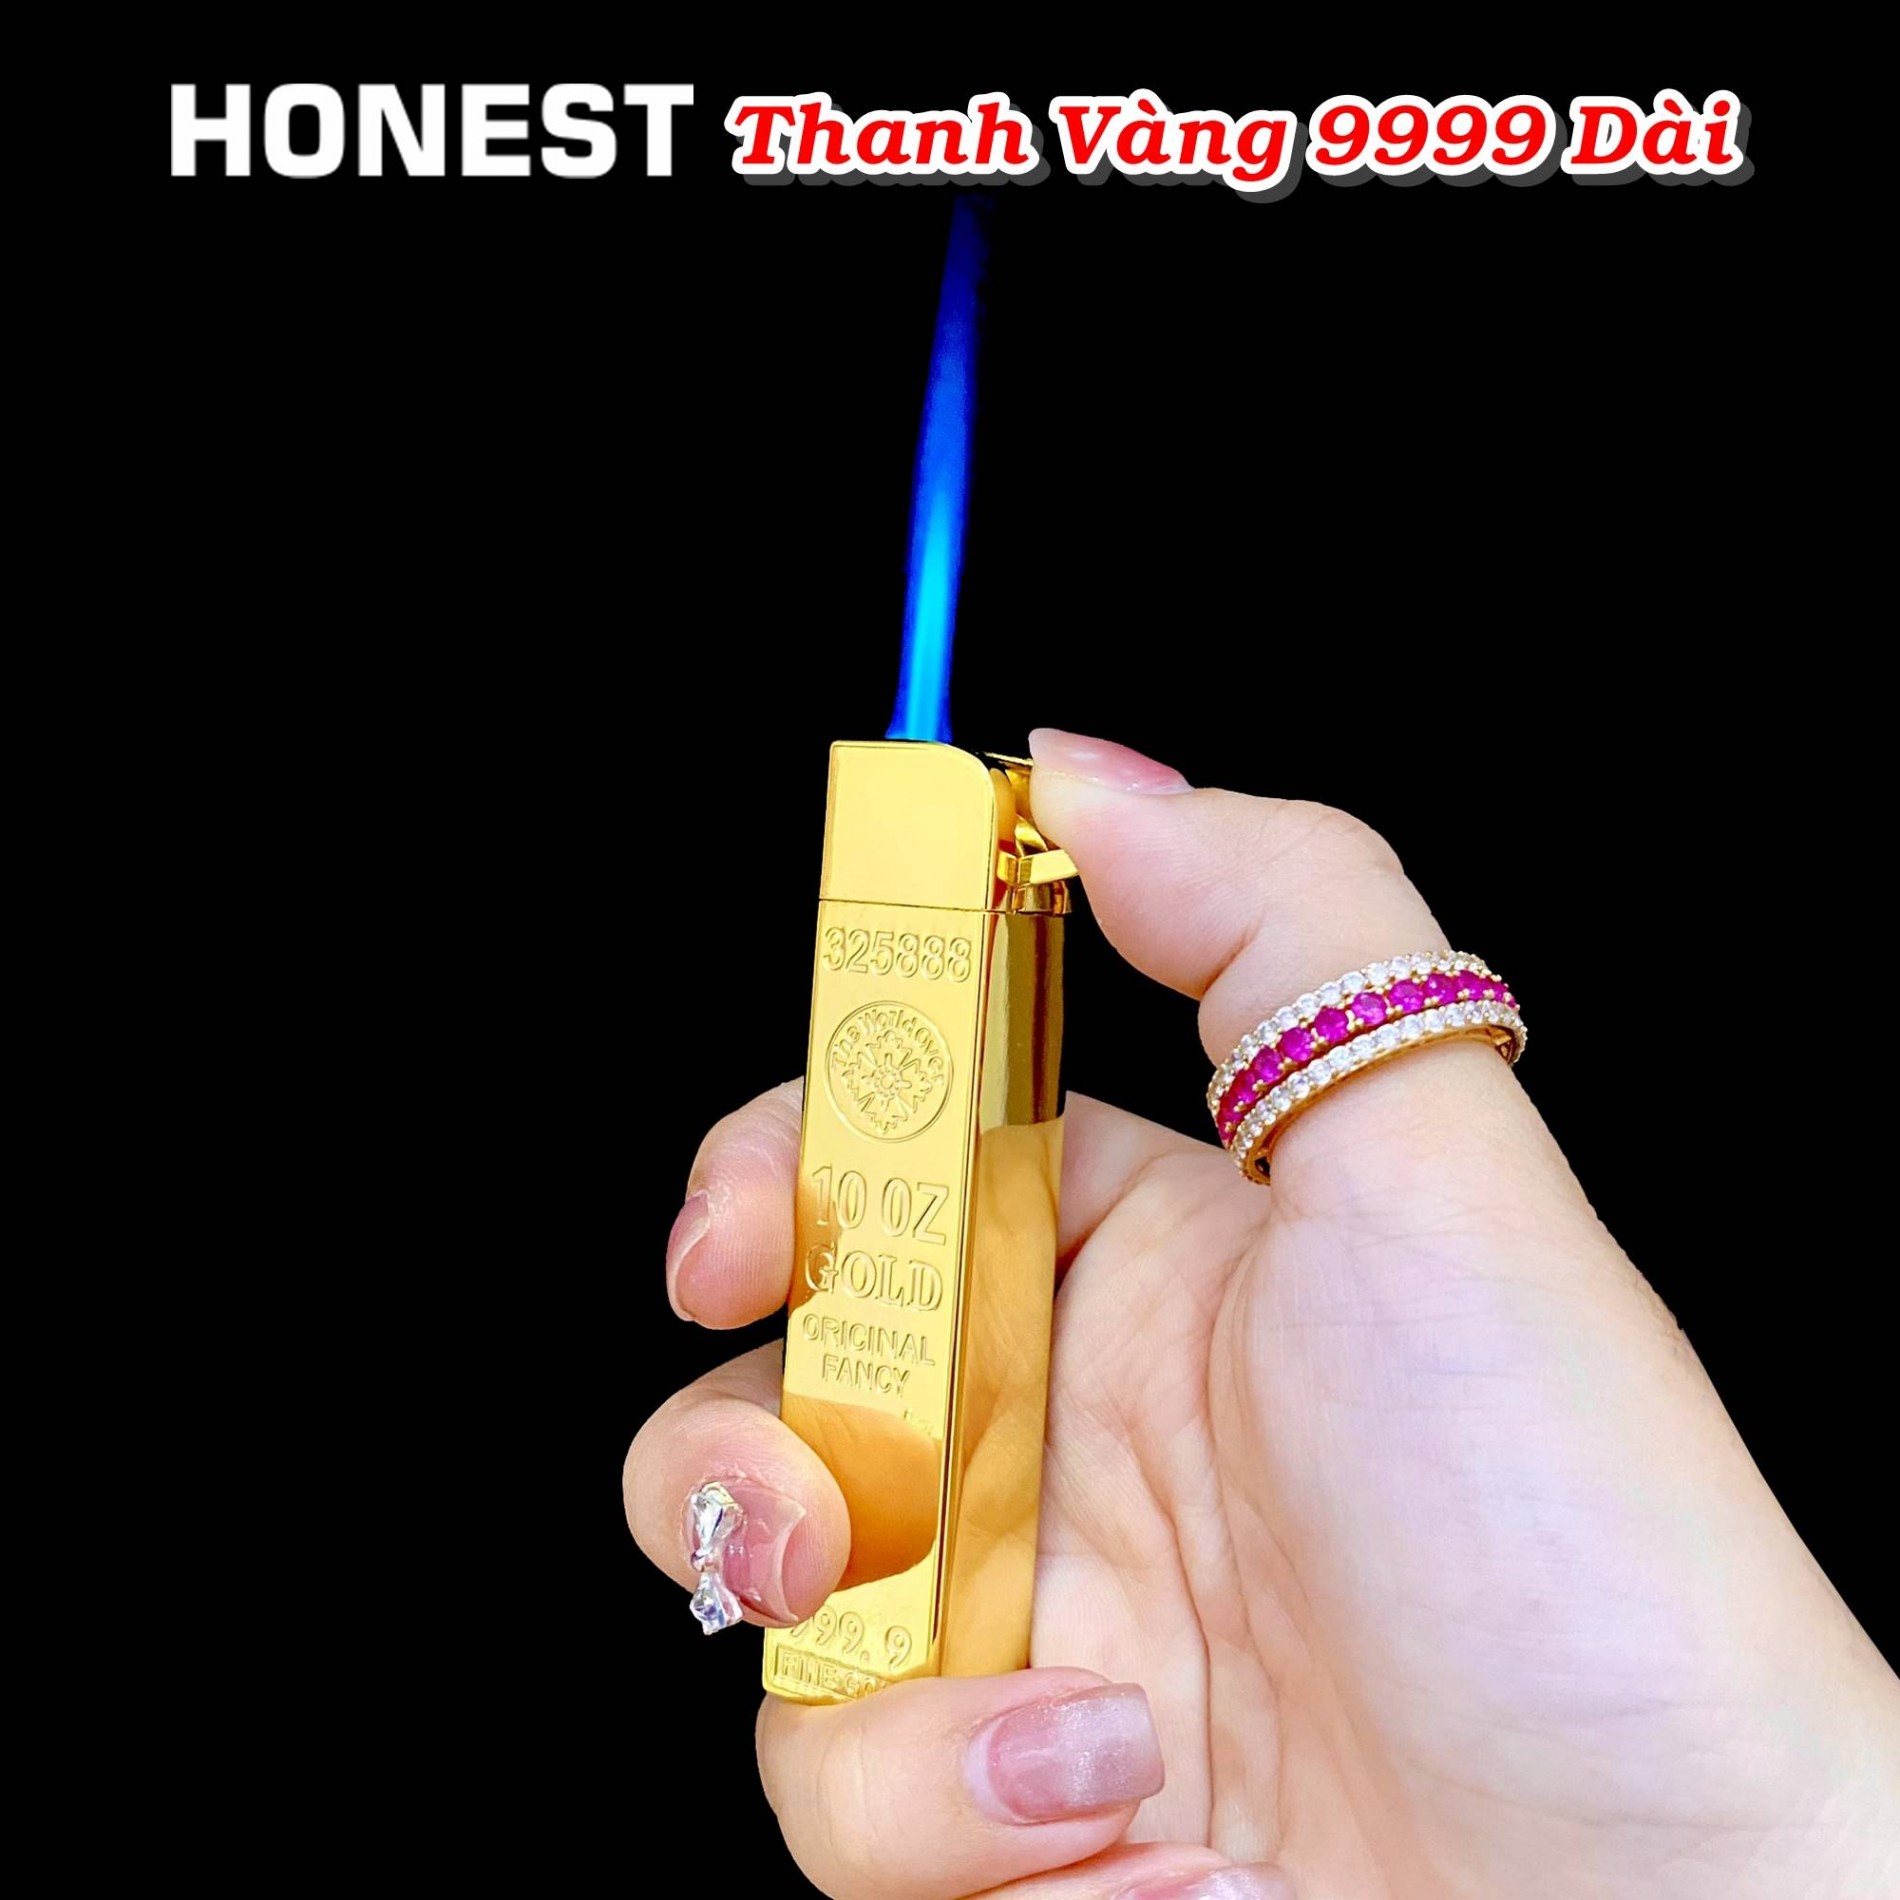 honest_thanh_vang_3